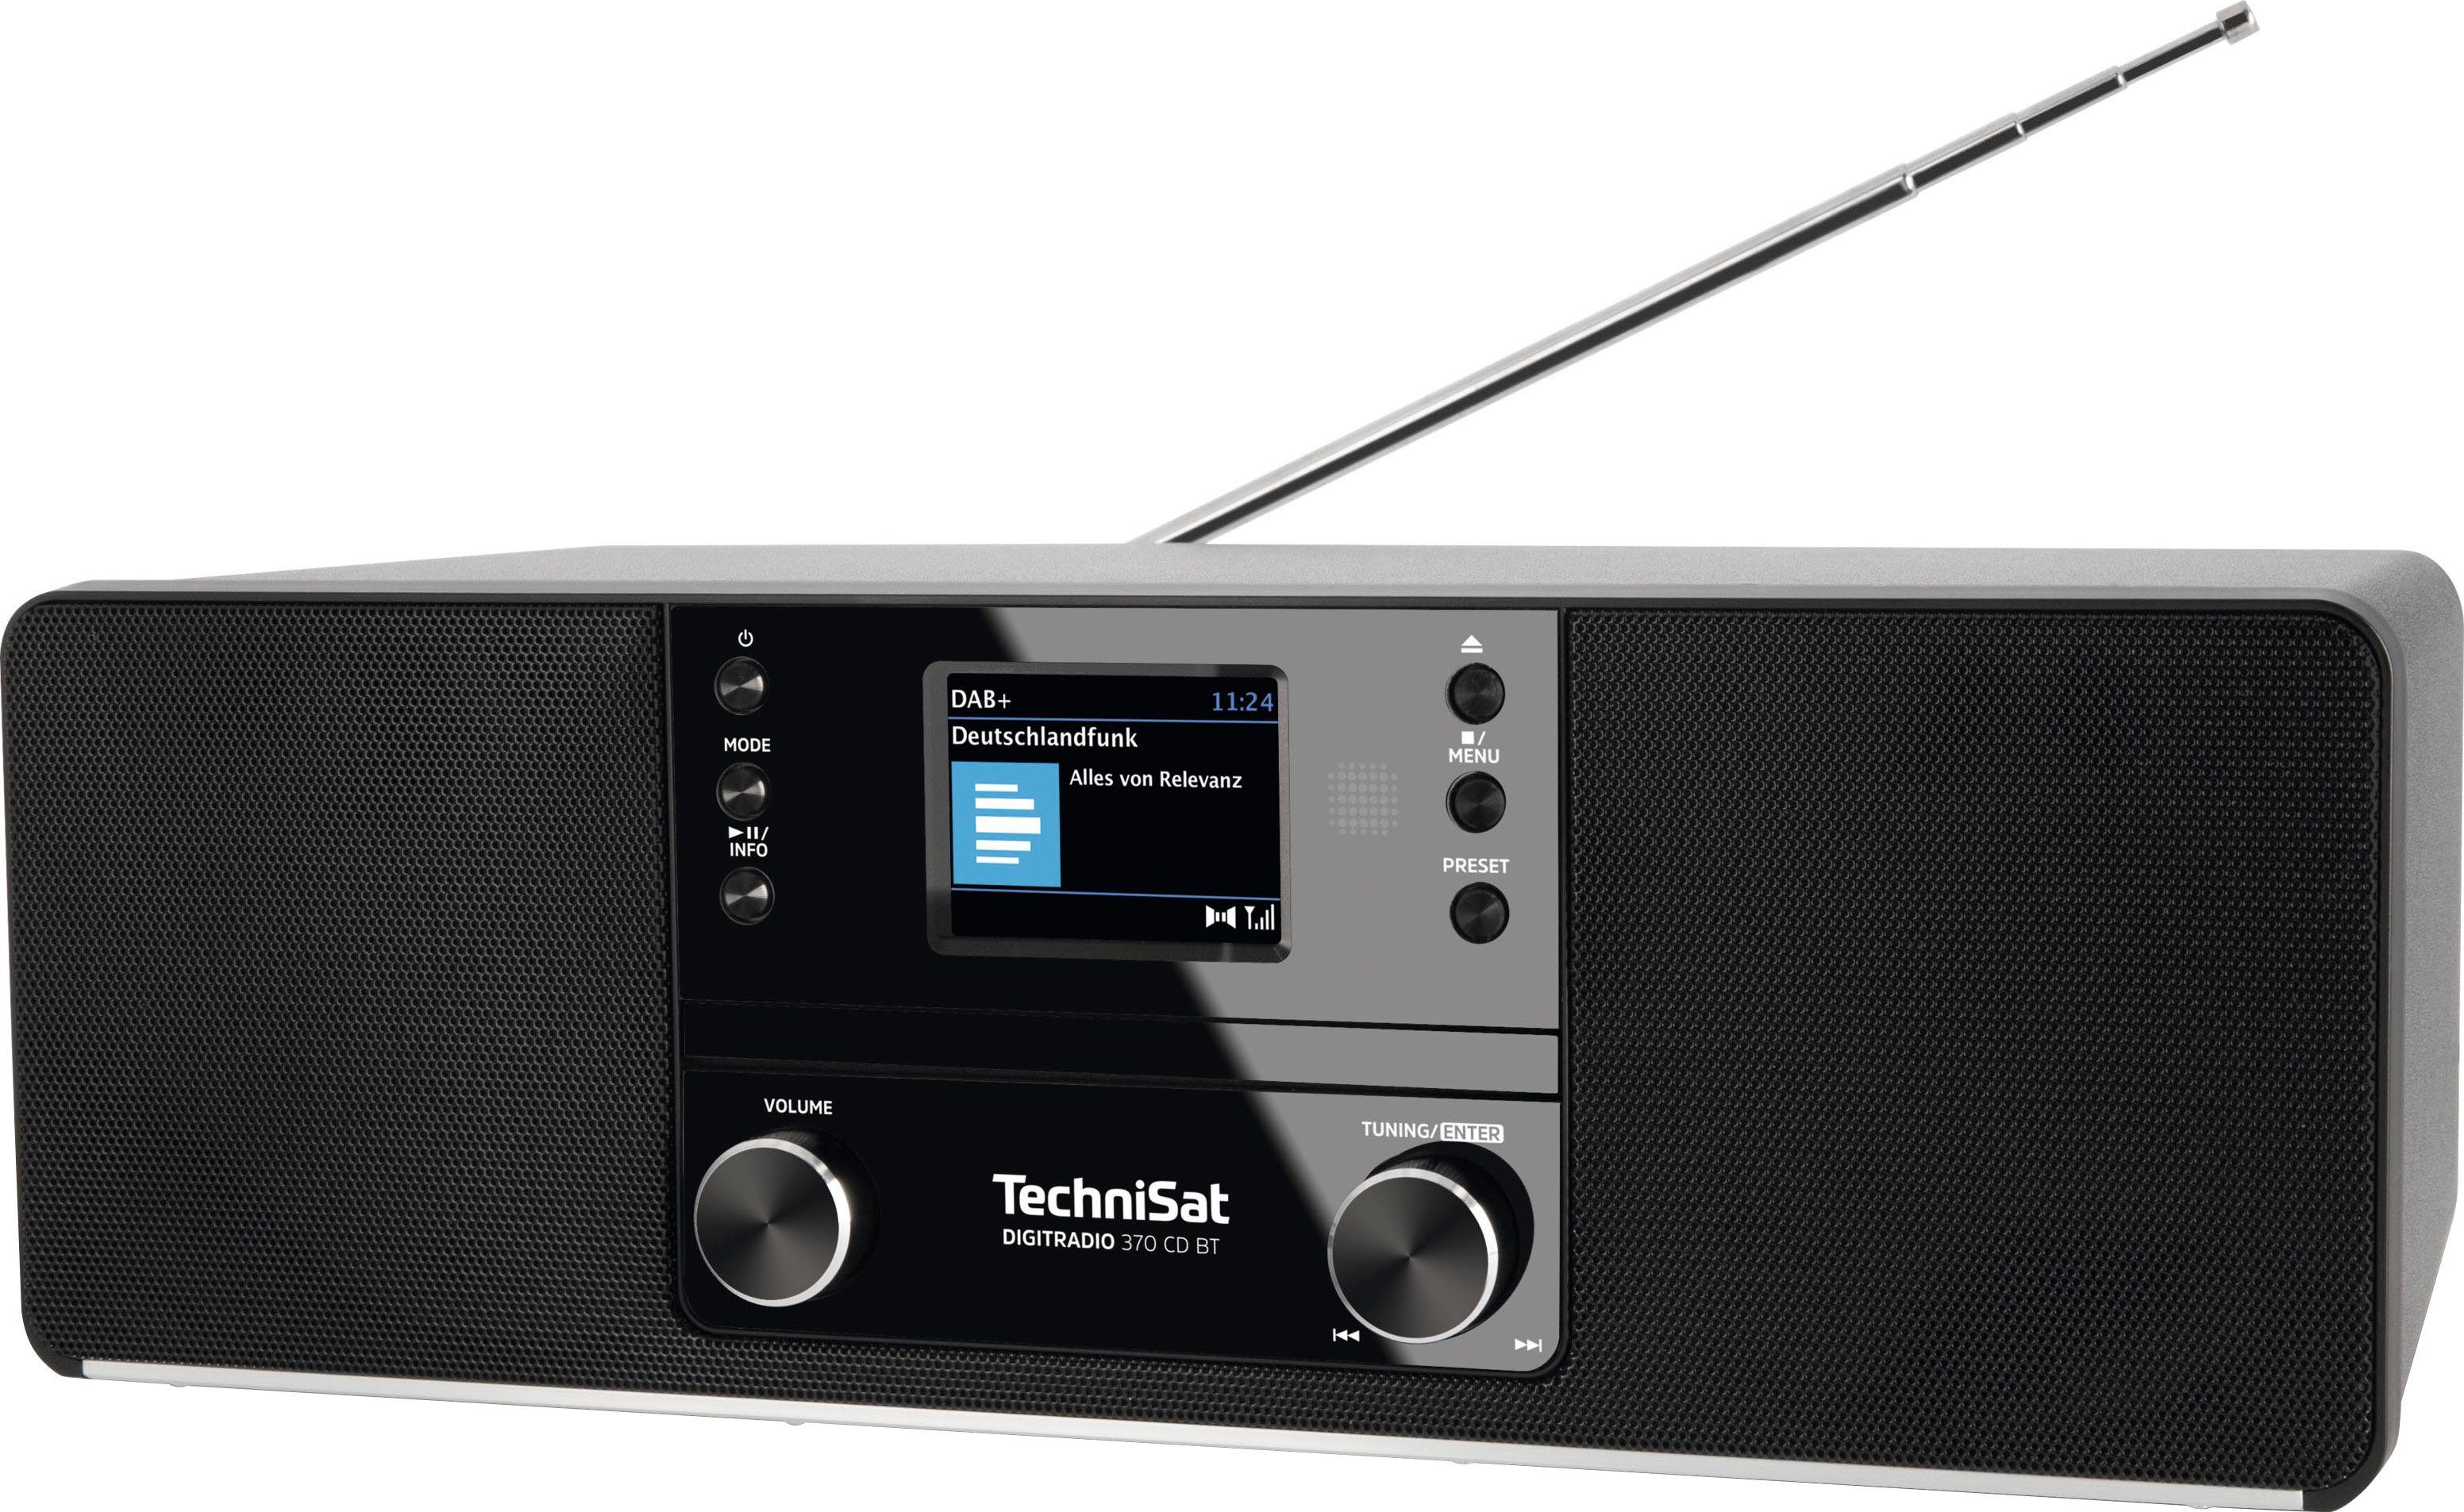 (DAB), Digitalradio UKW (Digitalradio W) 370 (DAB) schwarz DIGITRADIO CD 10 RDS, TechniSat BT mit